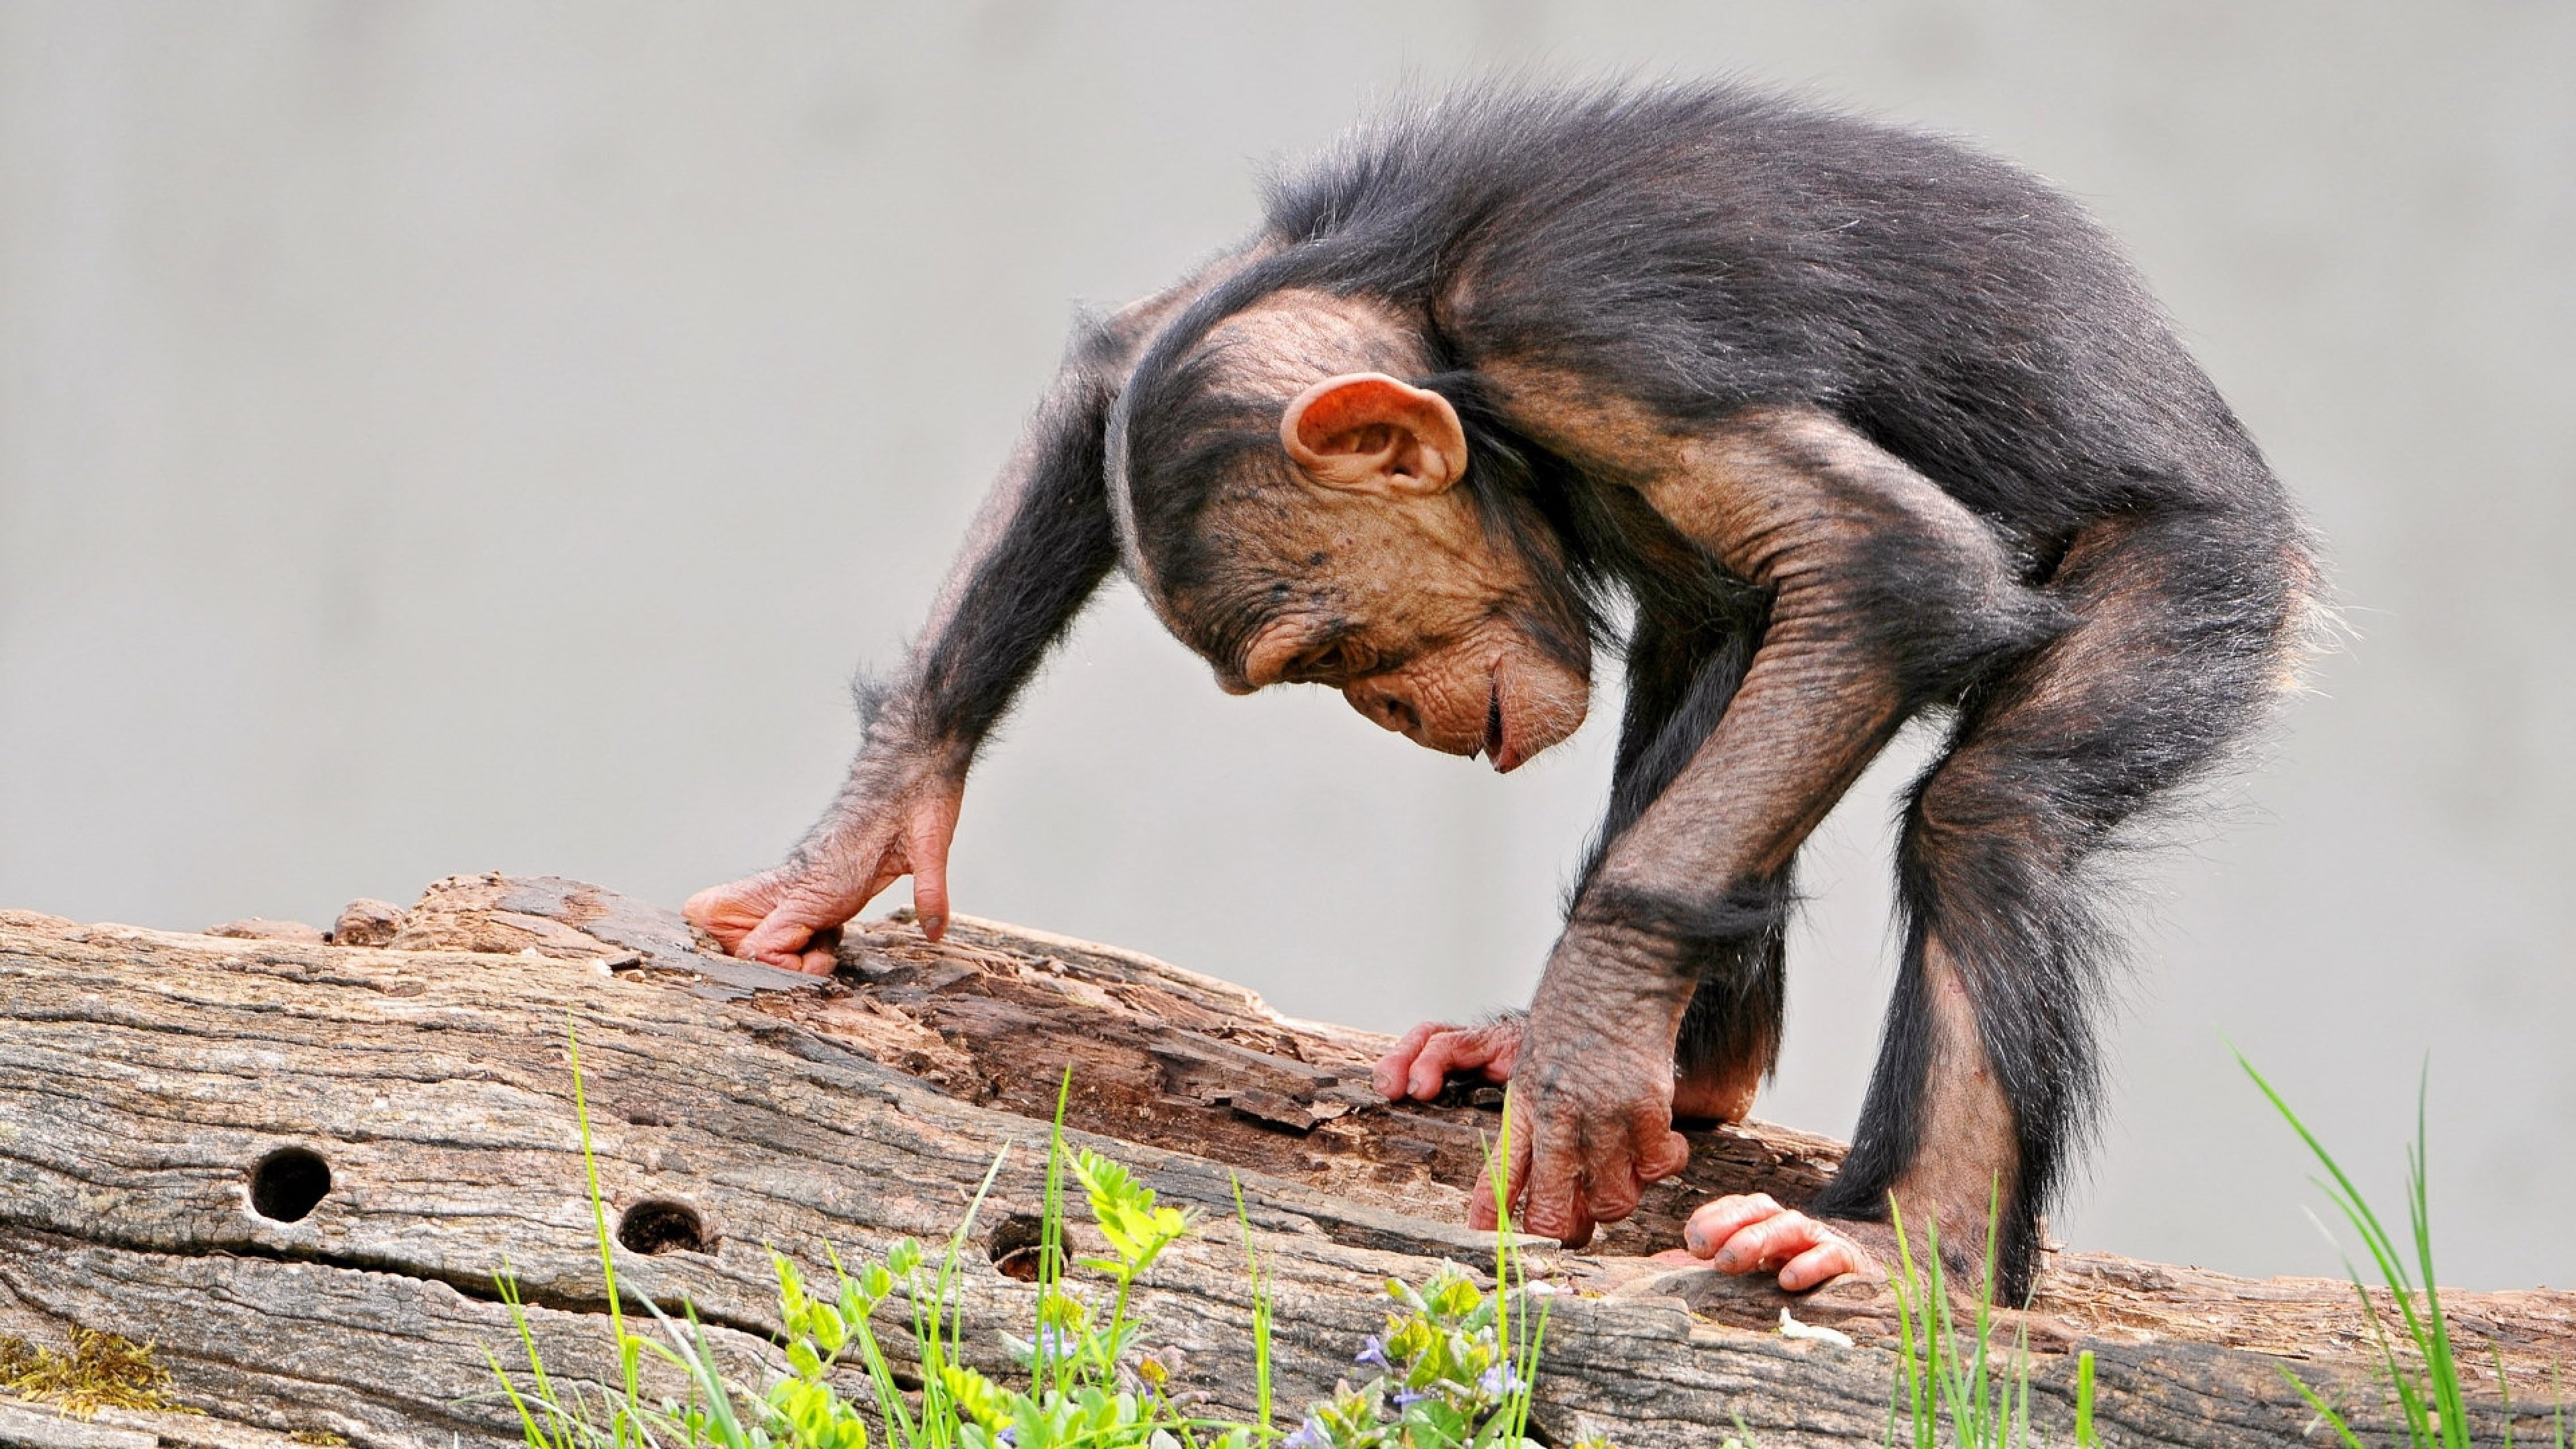 Chimpanzee photography, Chimpanzee close-up, Primate behavior, Jungle habitat, 3840x2160 4K Desktop